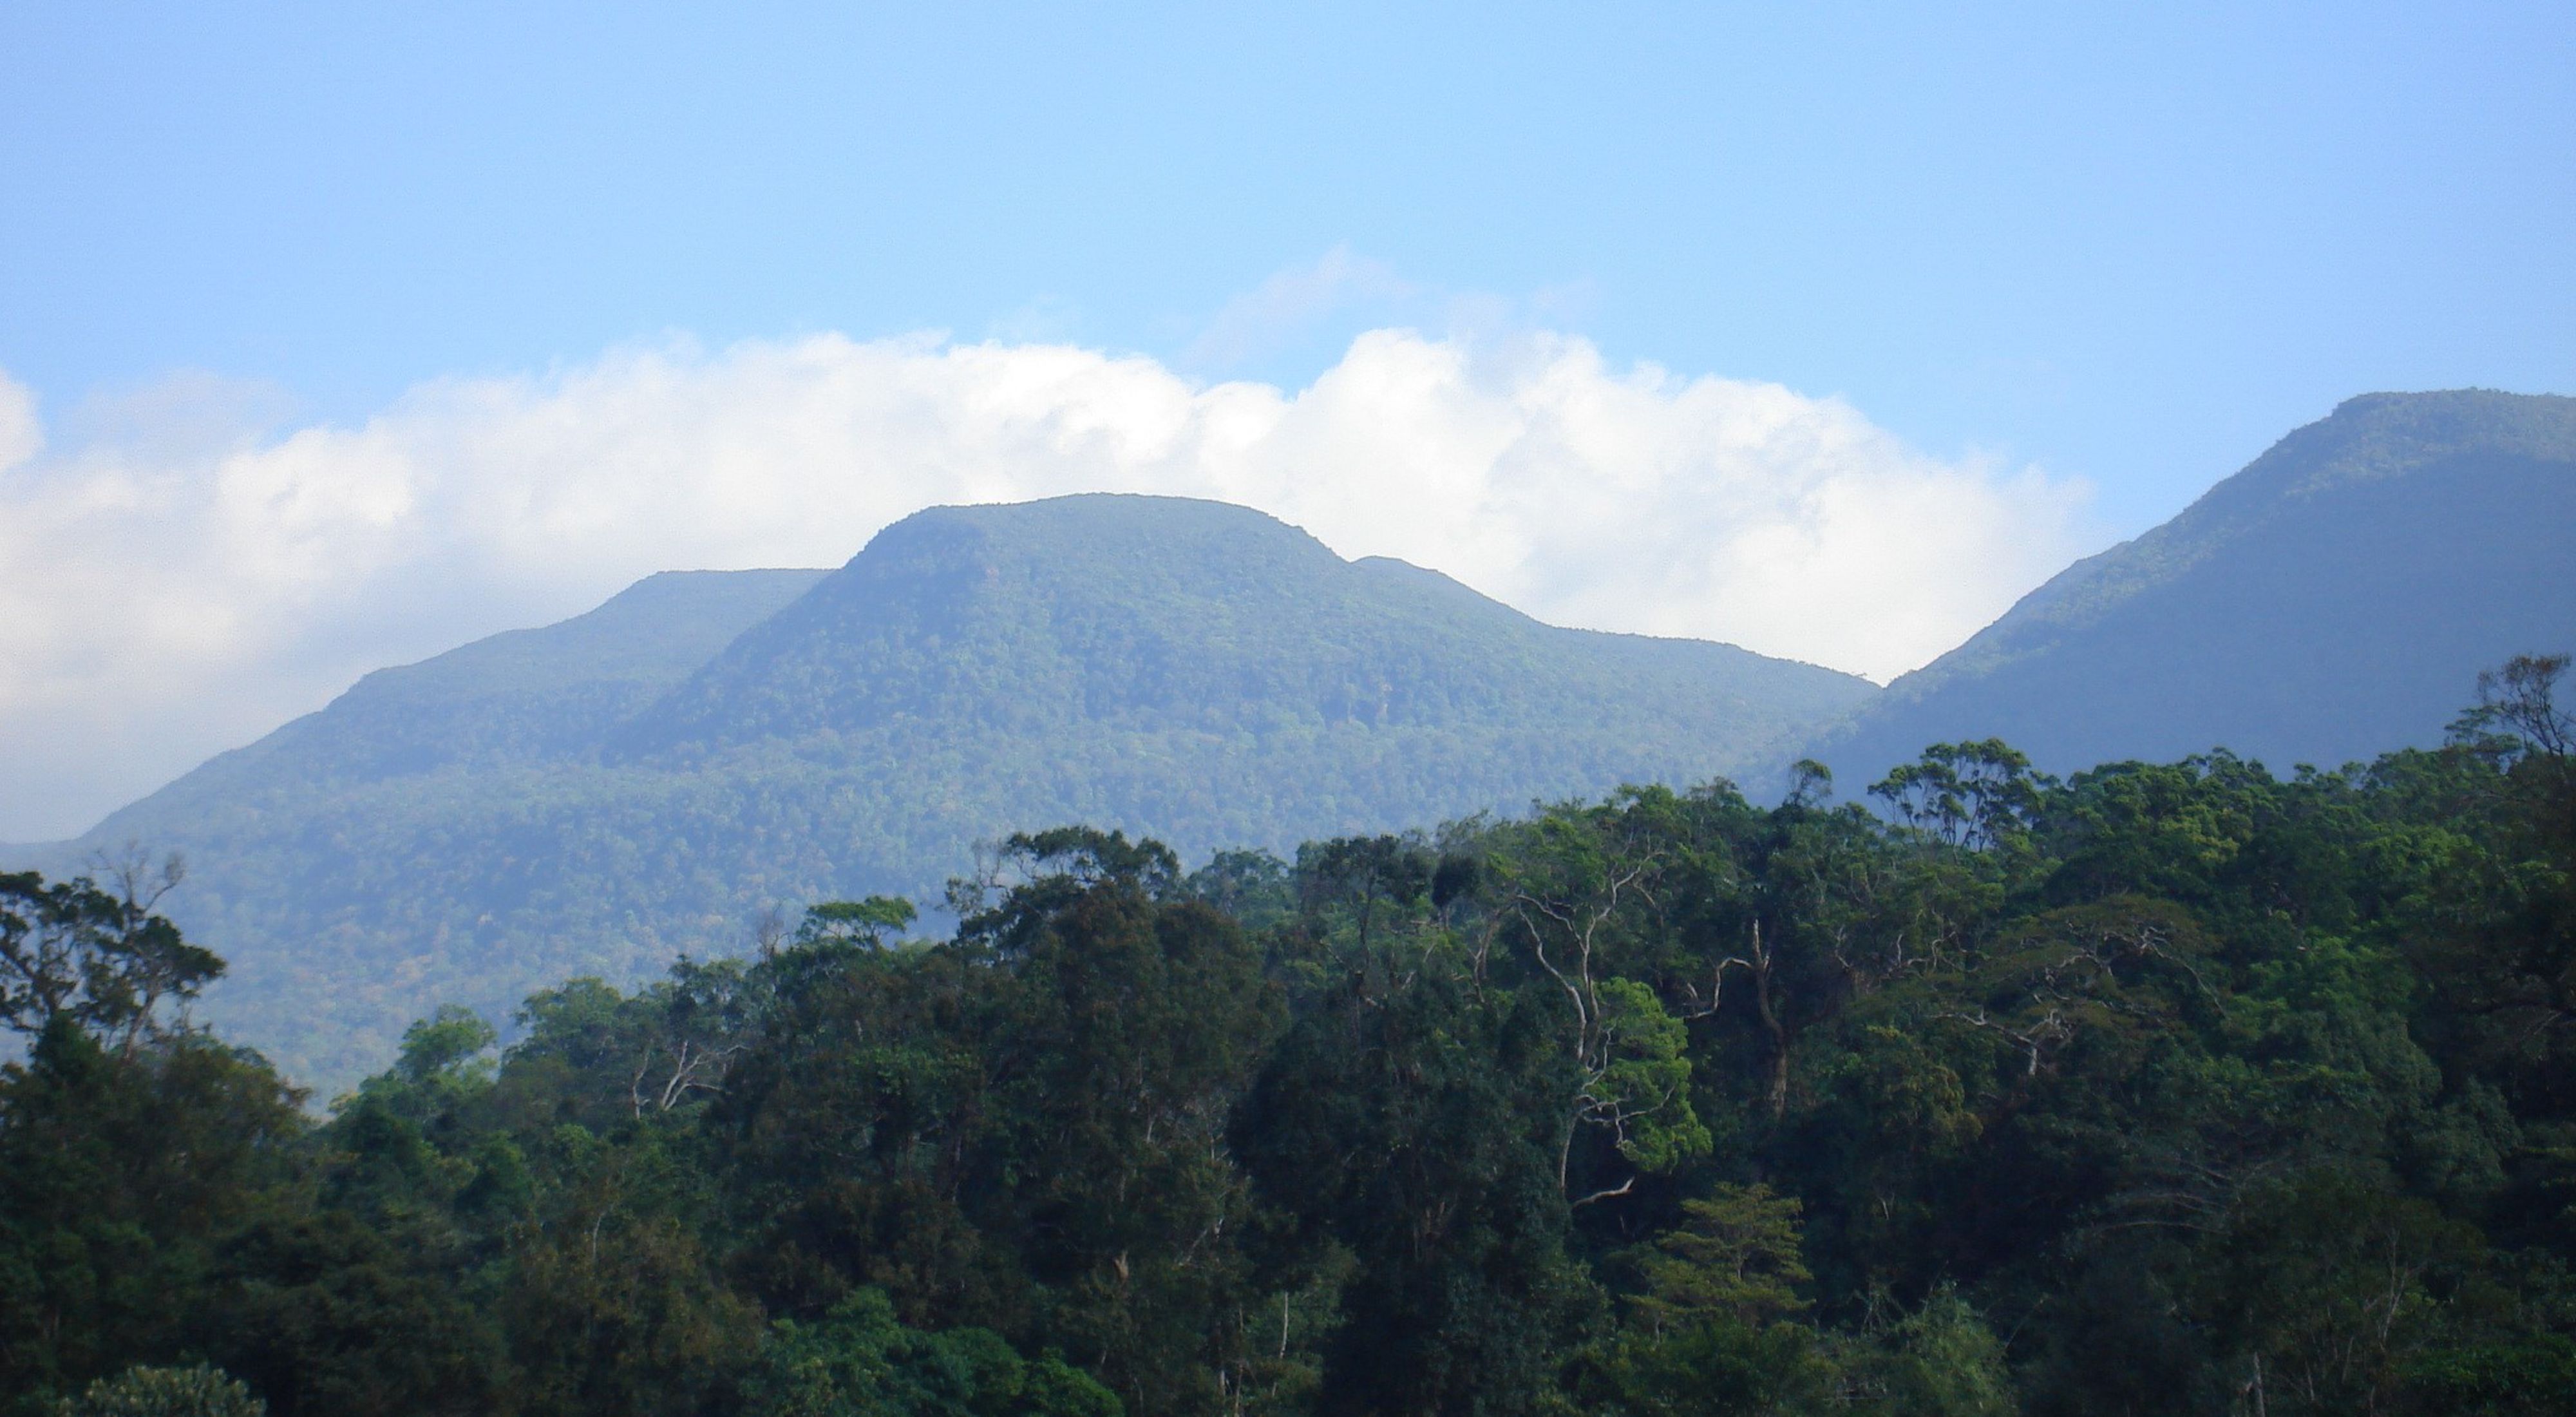 jungle mountains under a blue sky